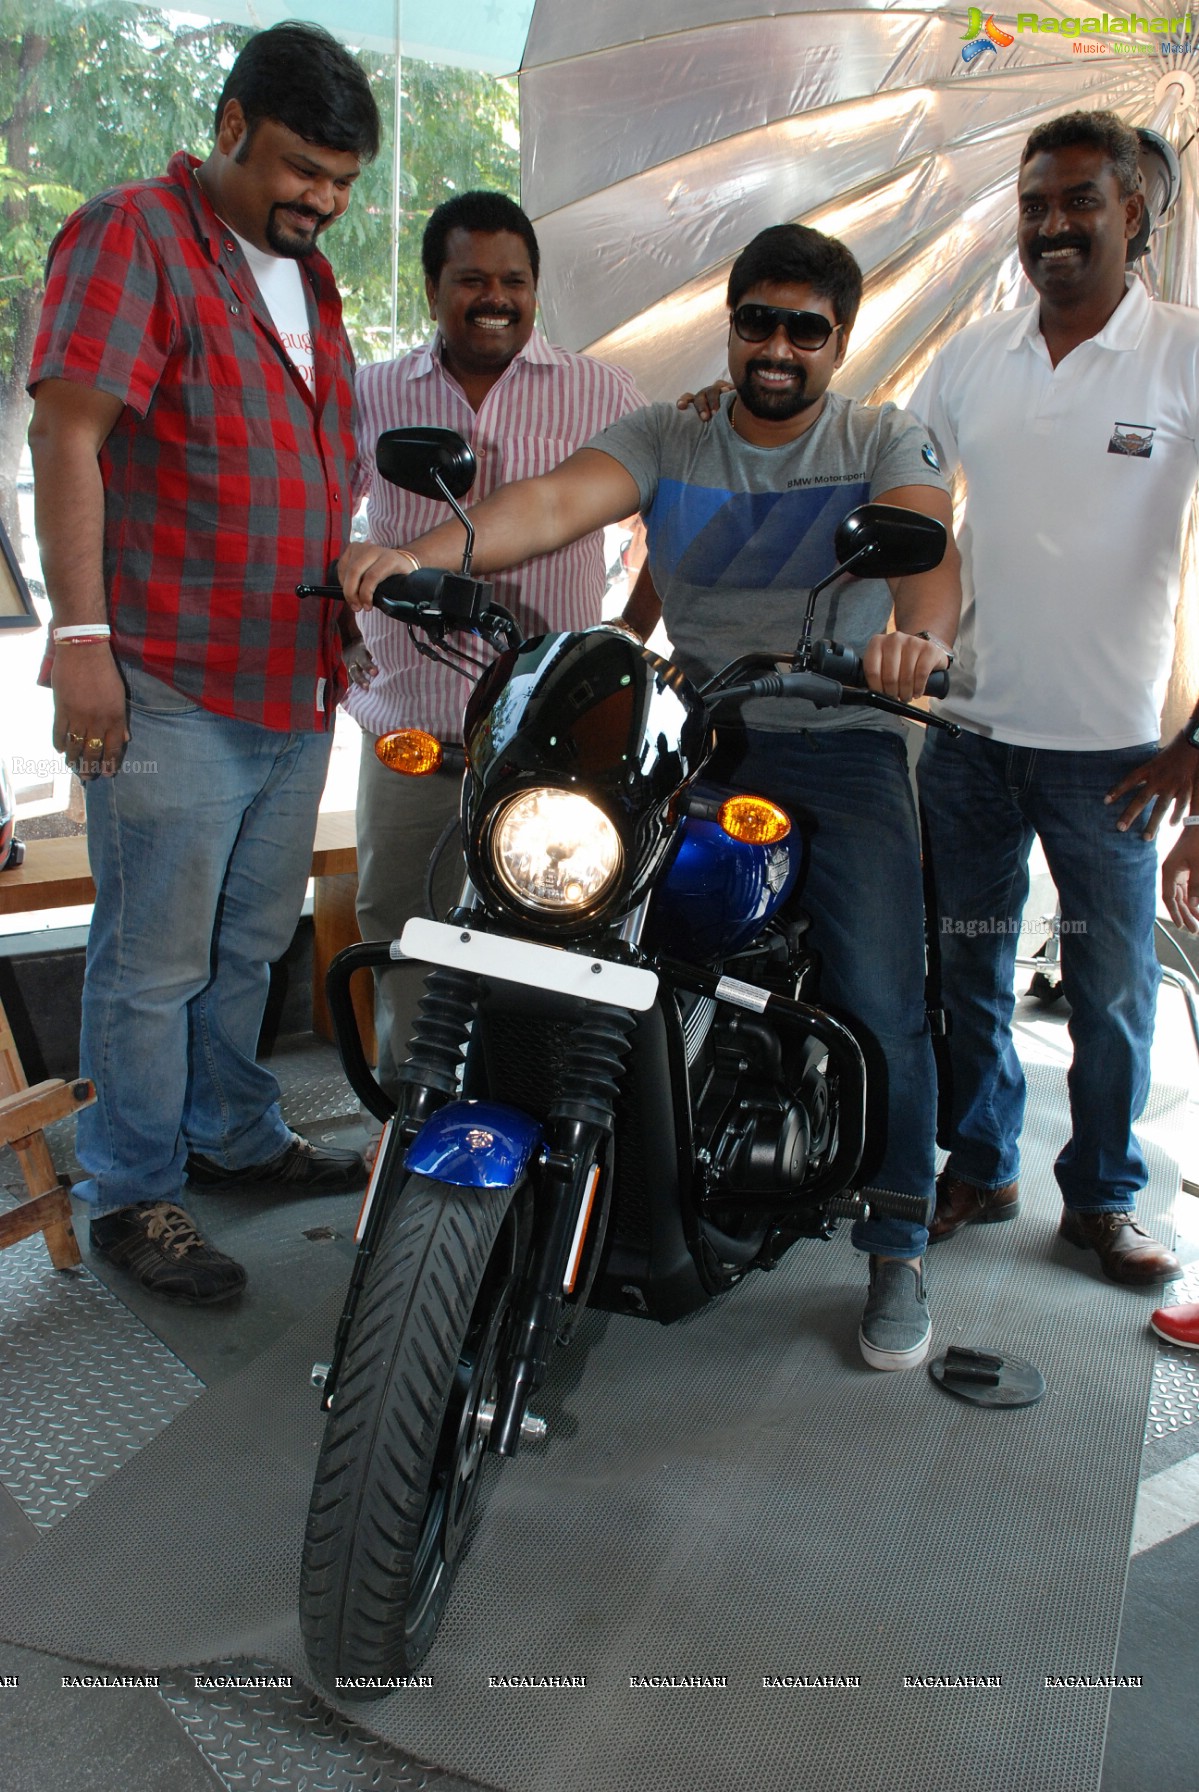 Luxury Brands Display at Harley Davidson Showroom, Hyderabad